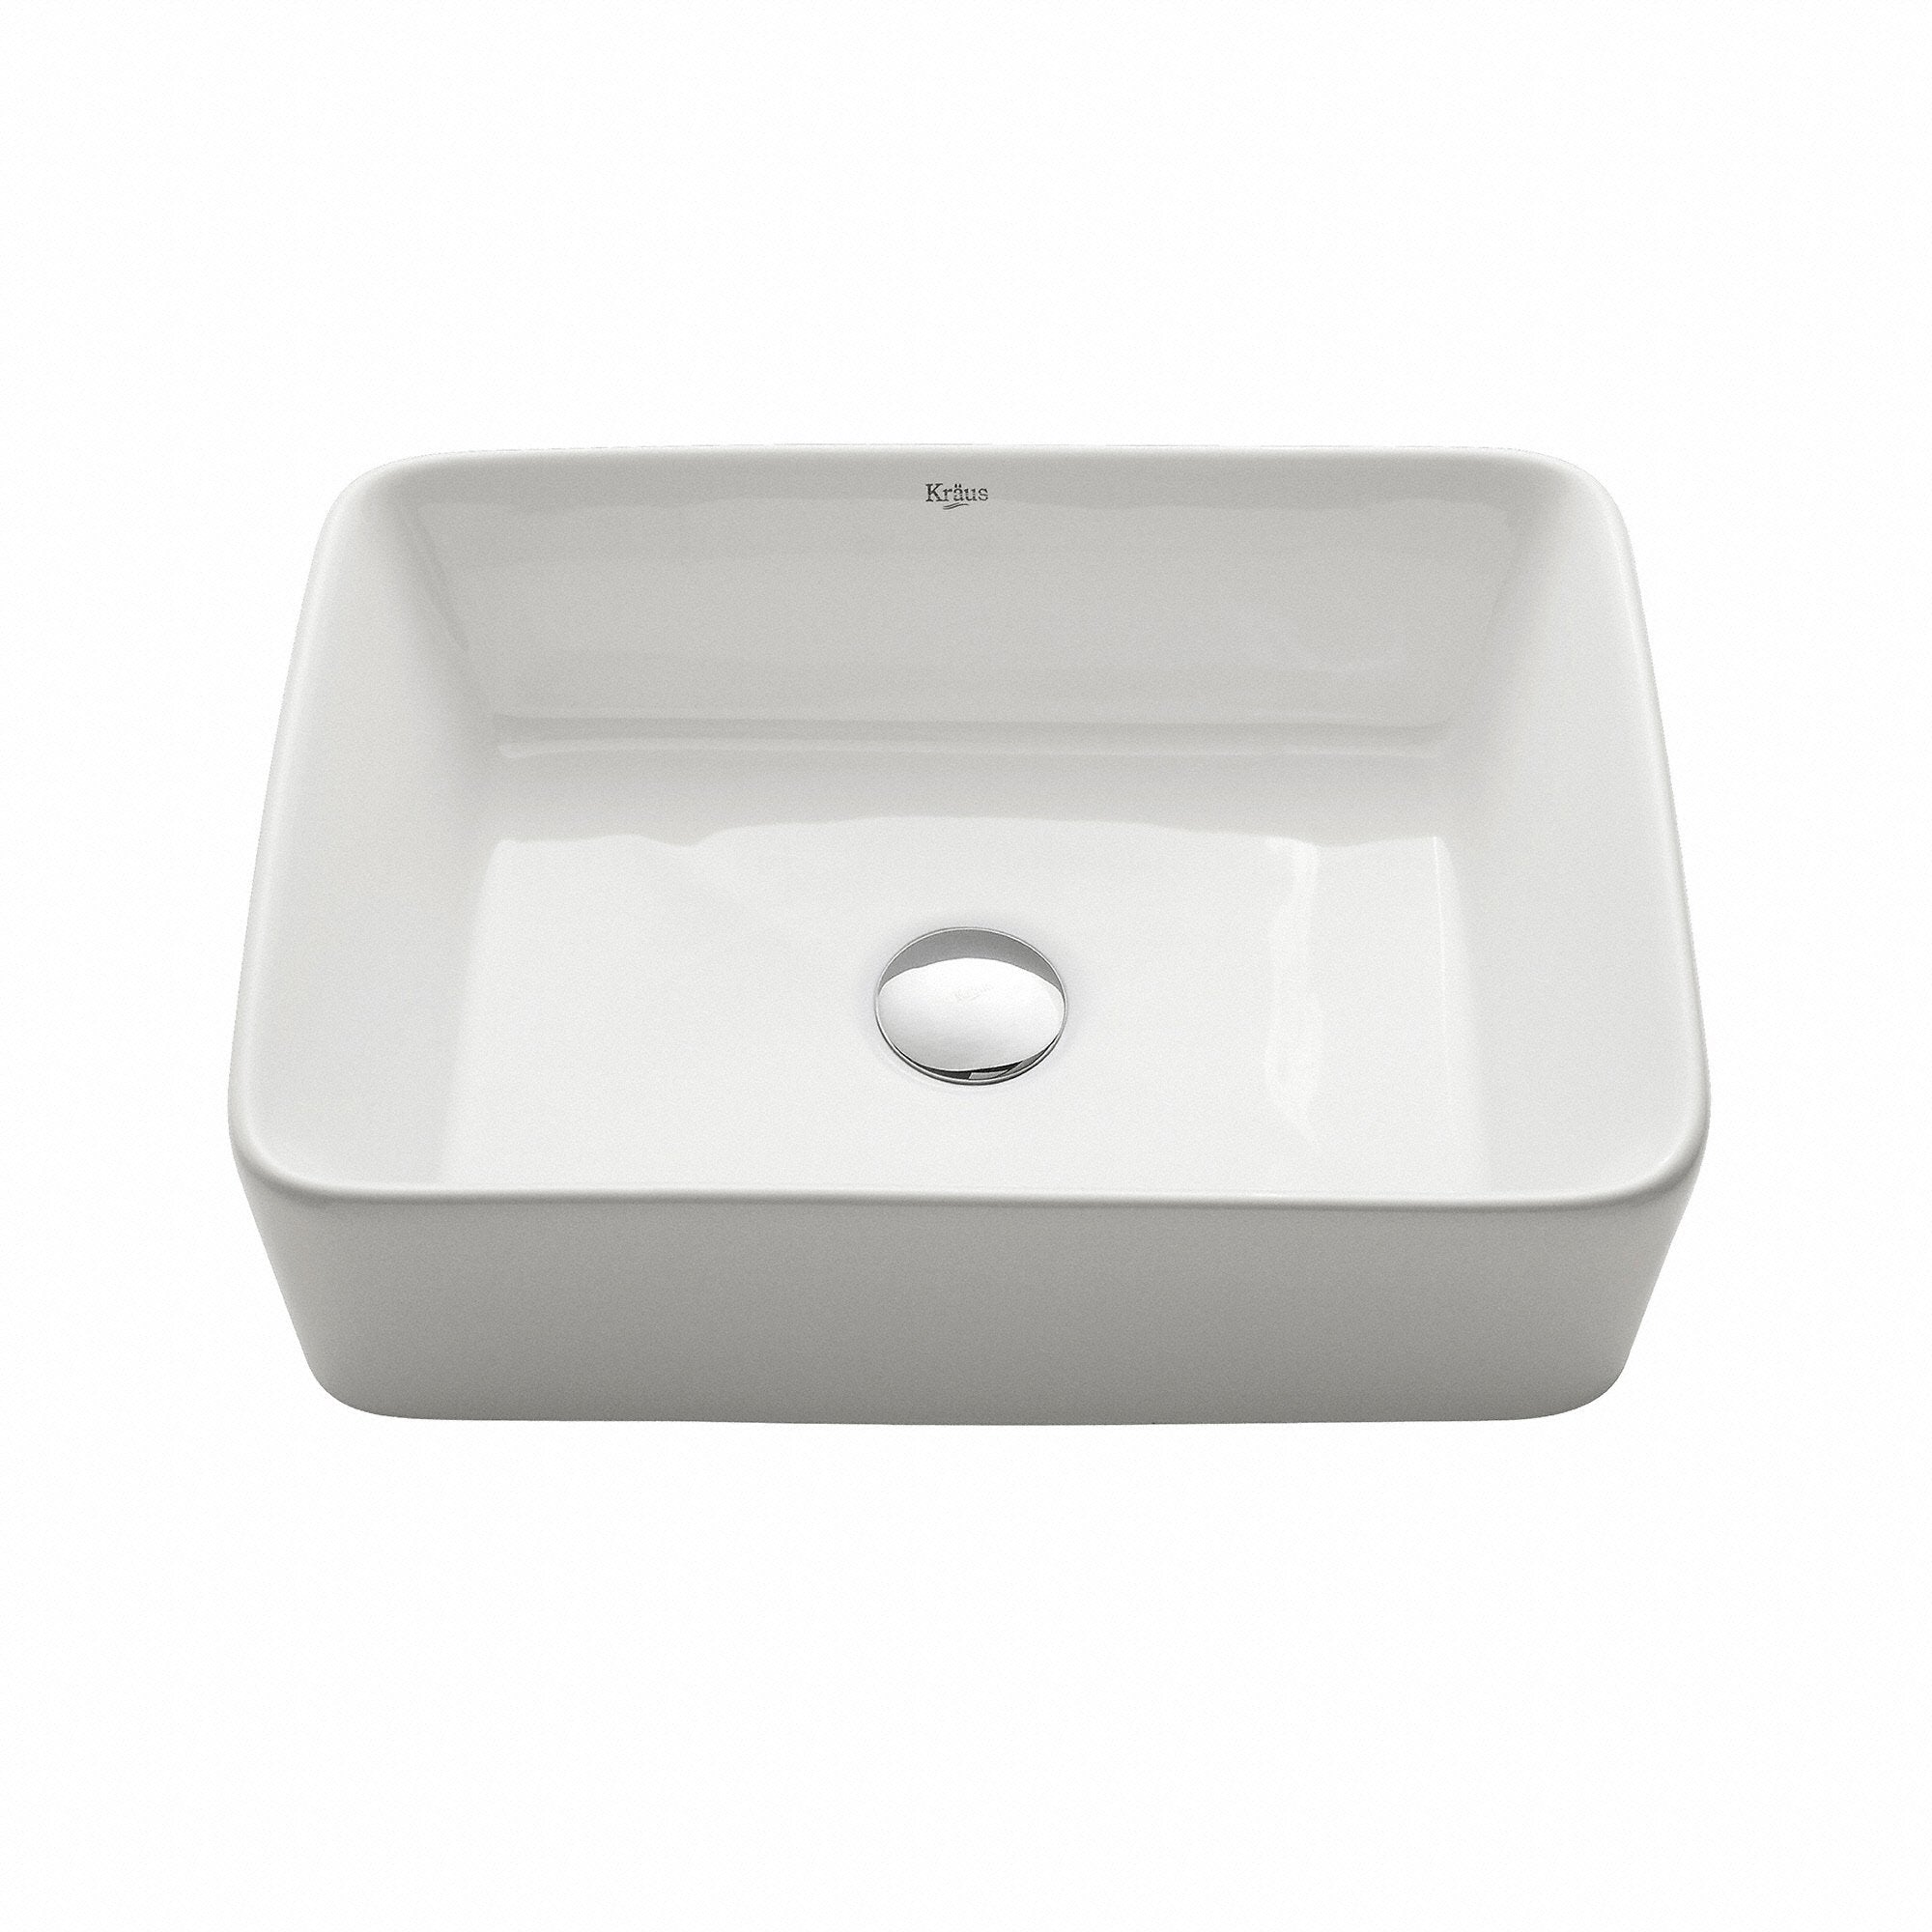 KRAUS Rectangular Ceramic Vessel Bathroom Sink in White-Bathroom Sinks-KRAUS